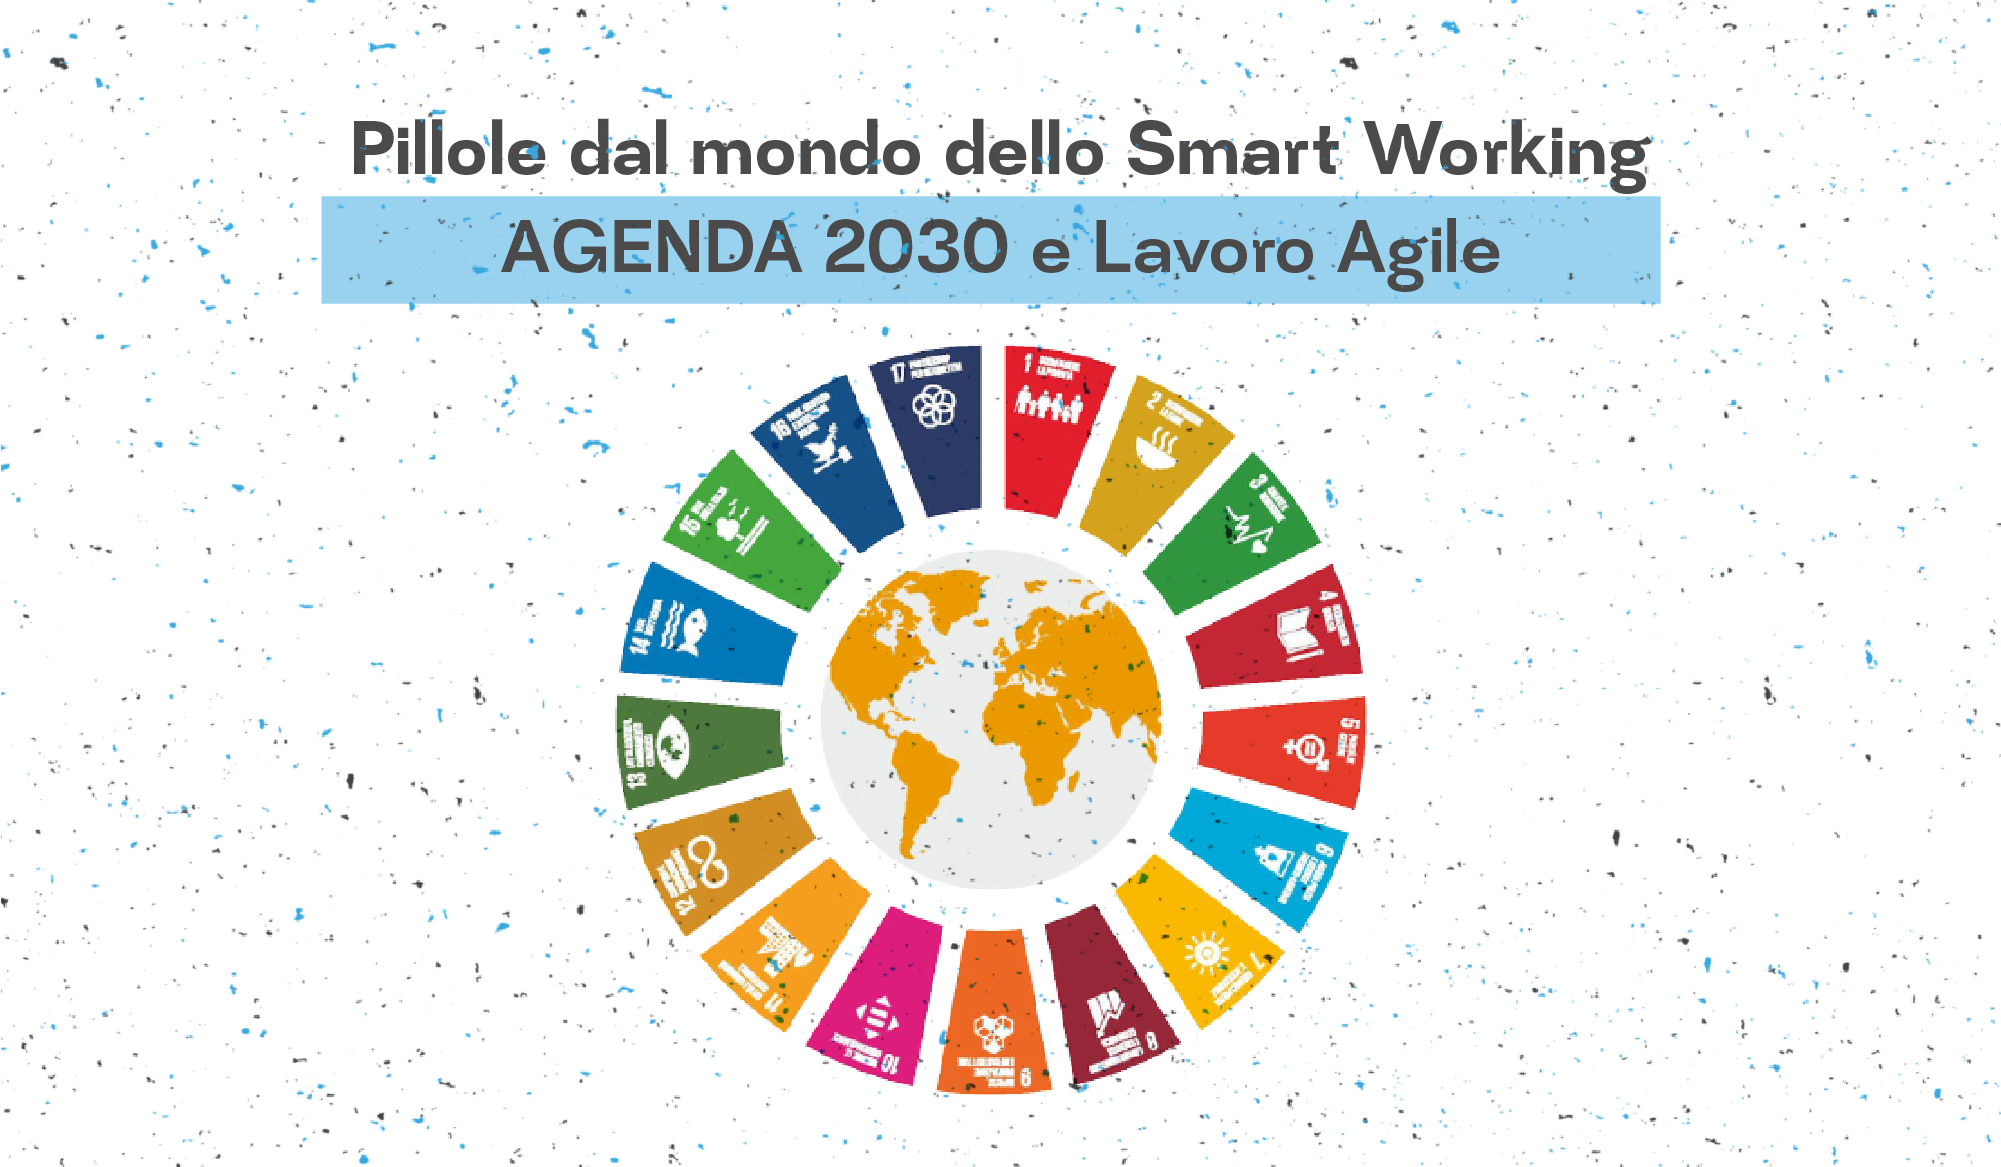 Agenda 2030 notonlydesk obiettivi